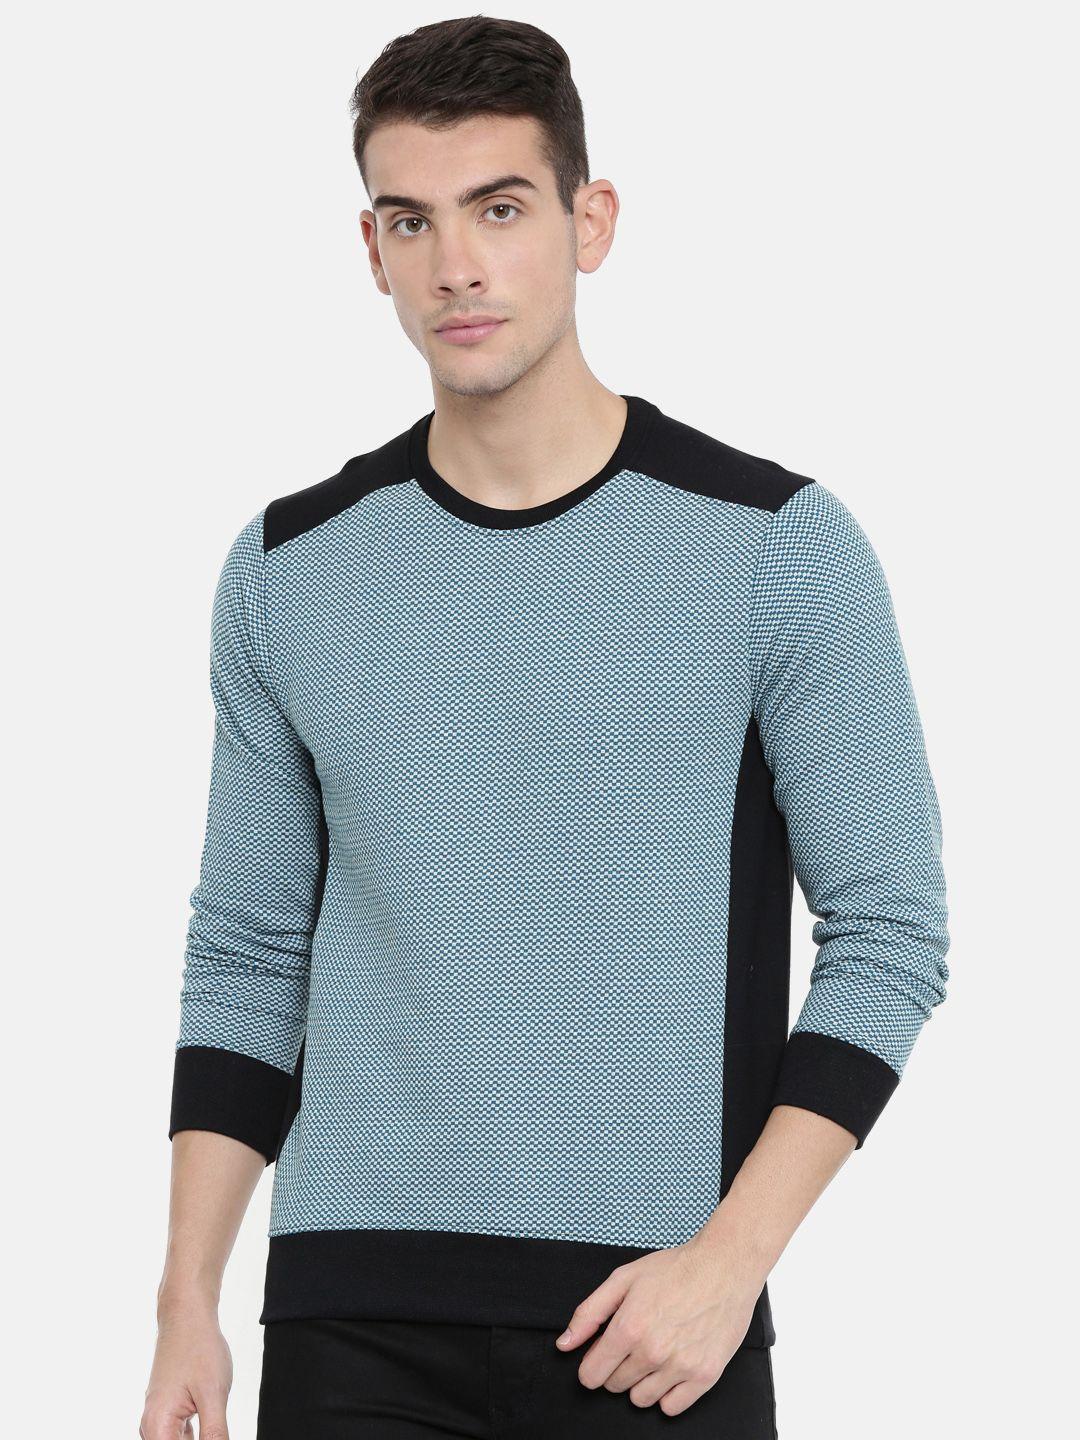 arise men grey & teal blue self-checked sweatshirt